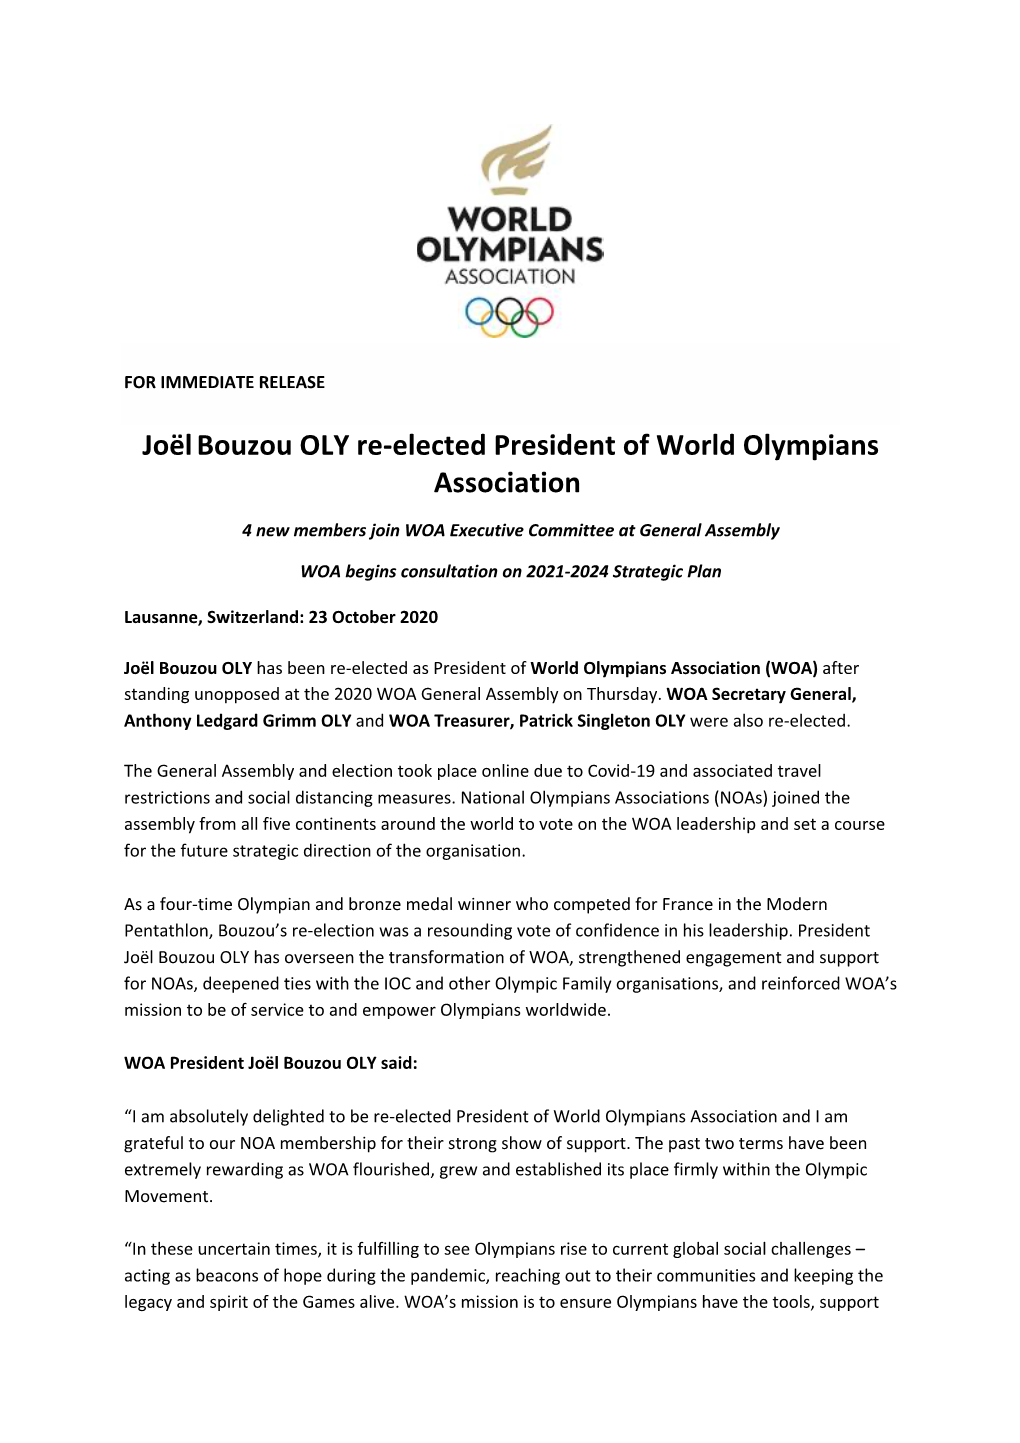 Joël Bouzou OLY Re-Elected President of World Olympians Association